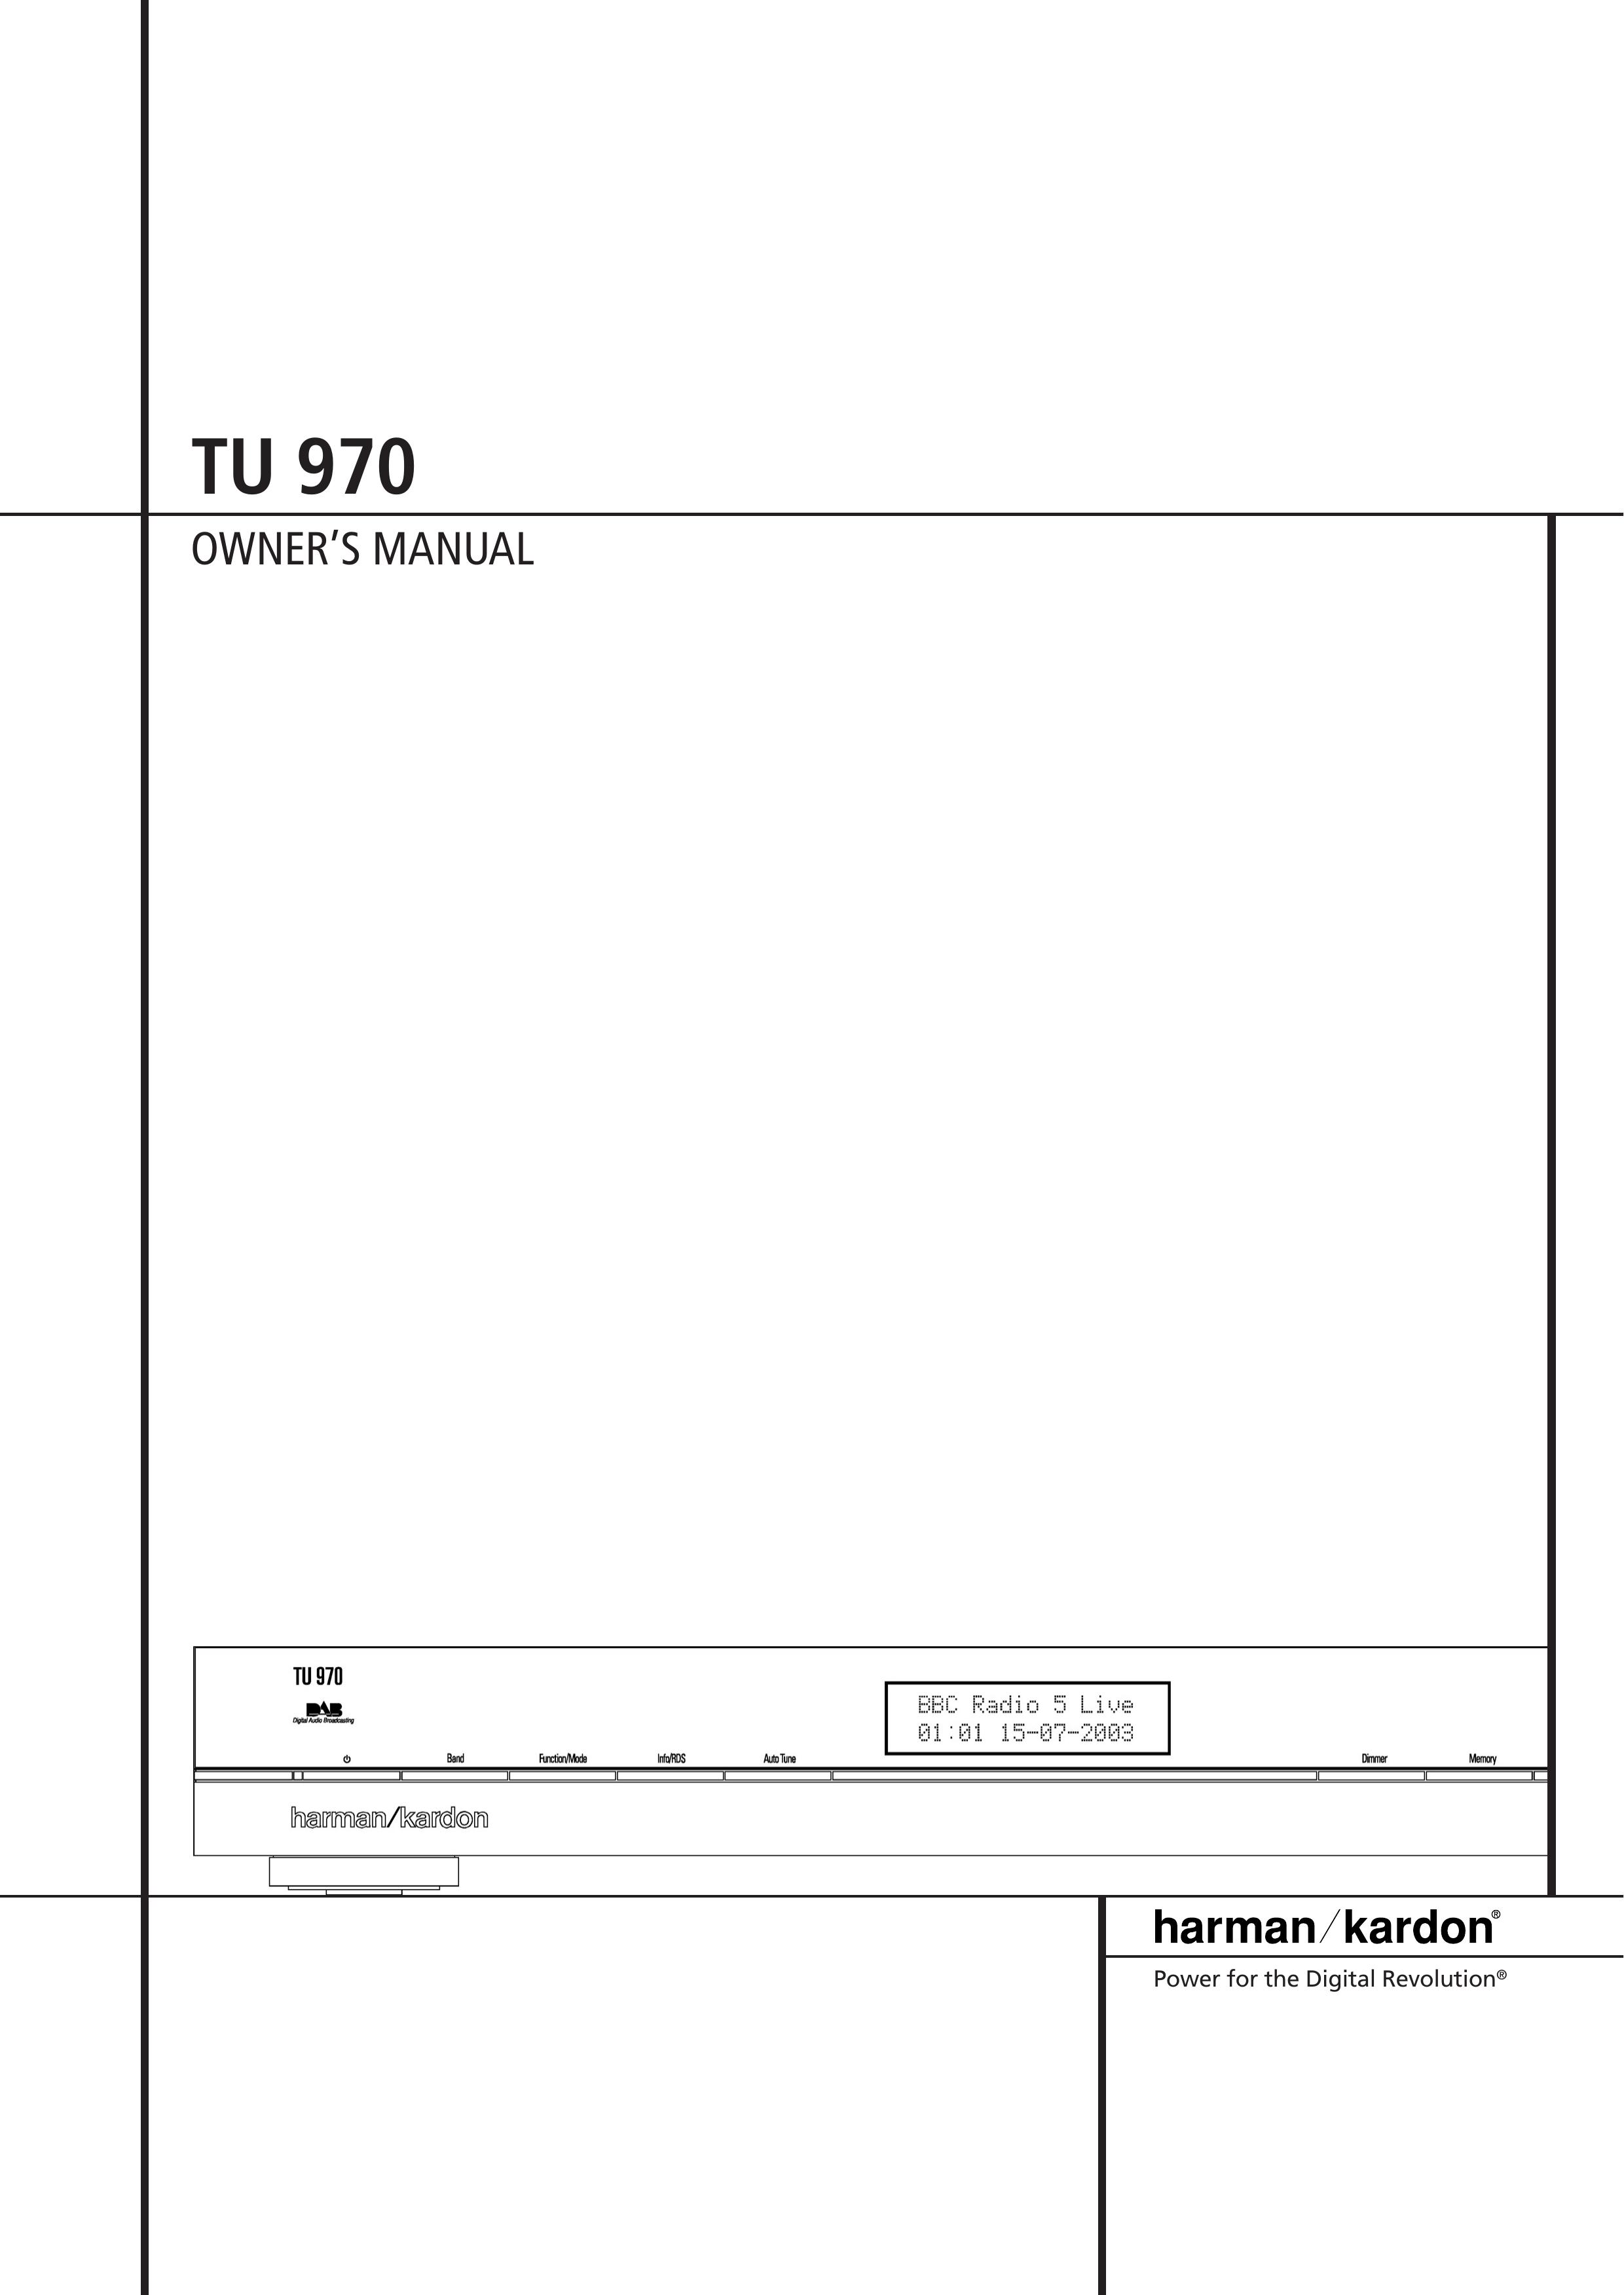 Harman-Kardon TU 970 Music Mixer User Manual